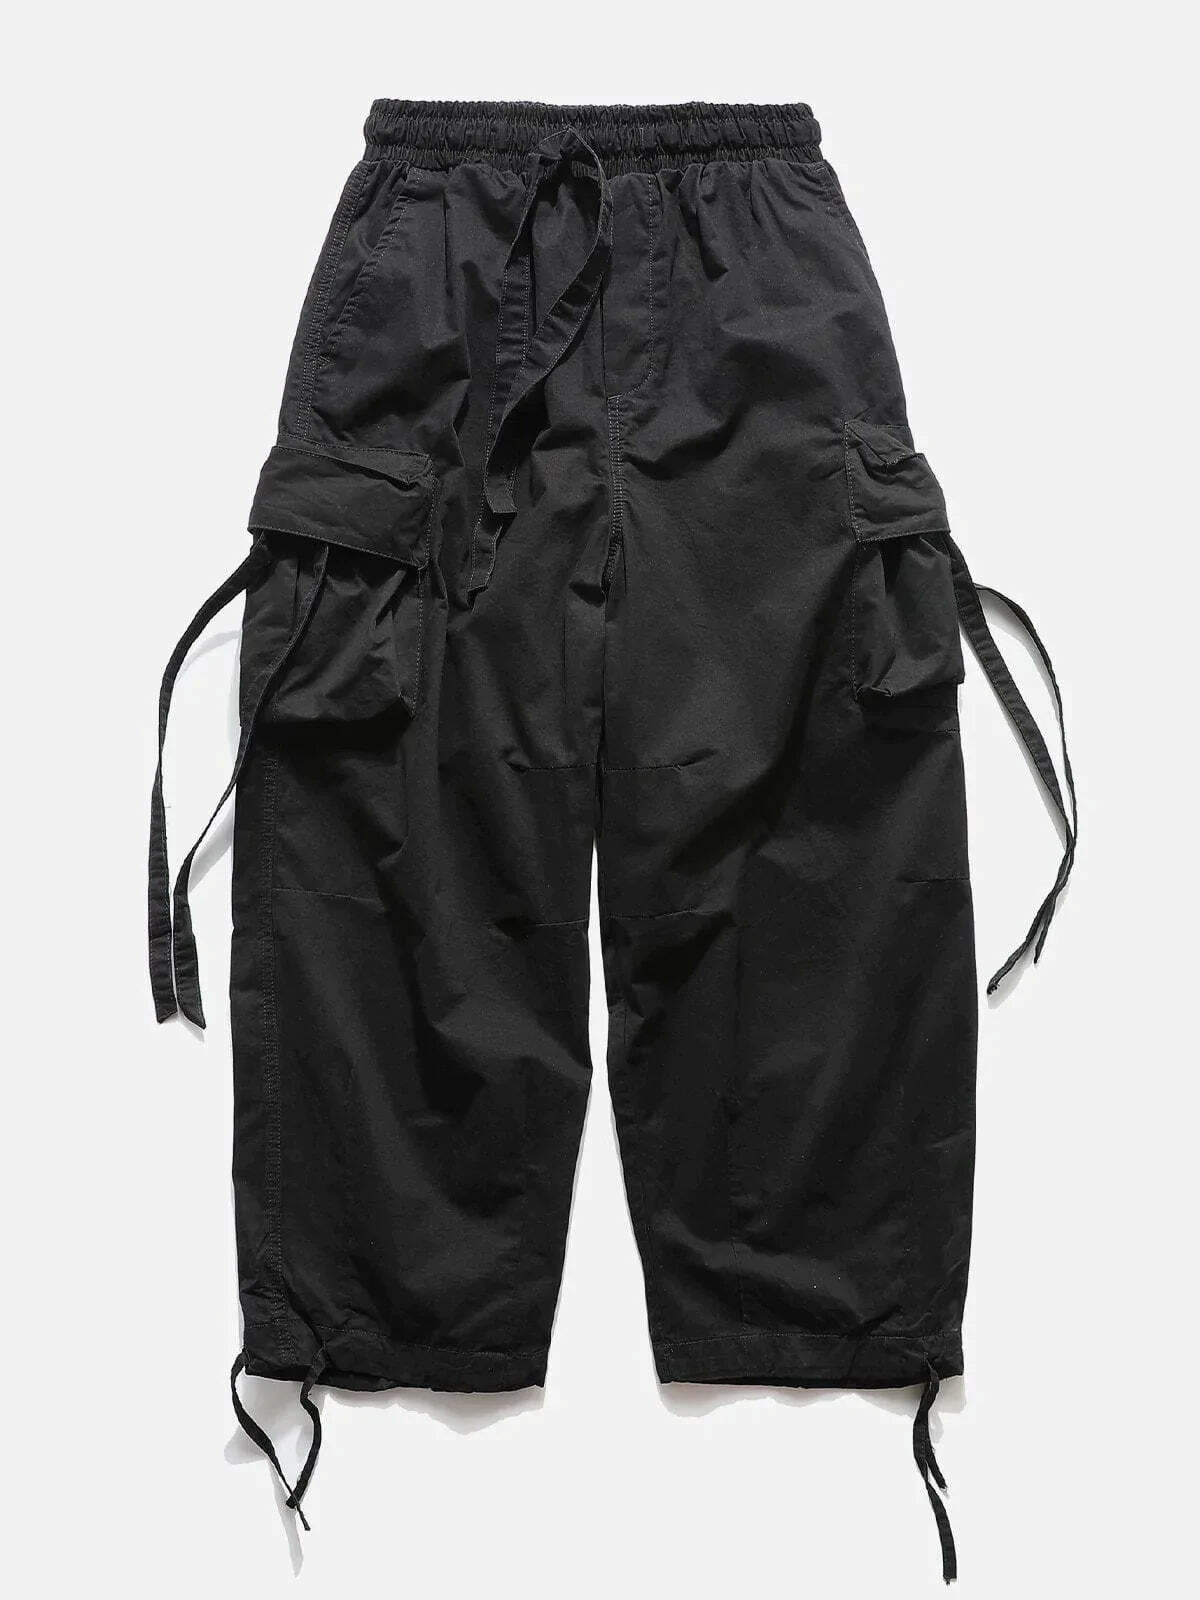 flap pocket pants functional & edgy streetwear 3977